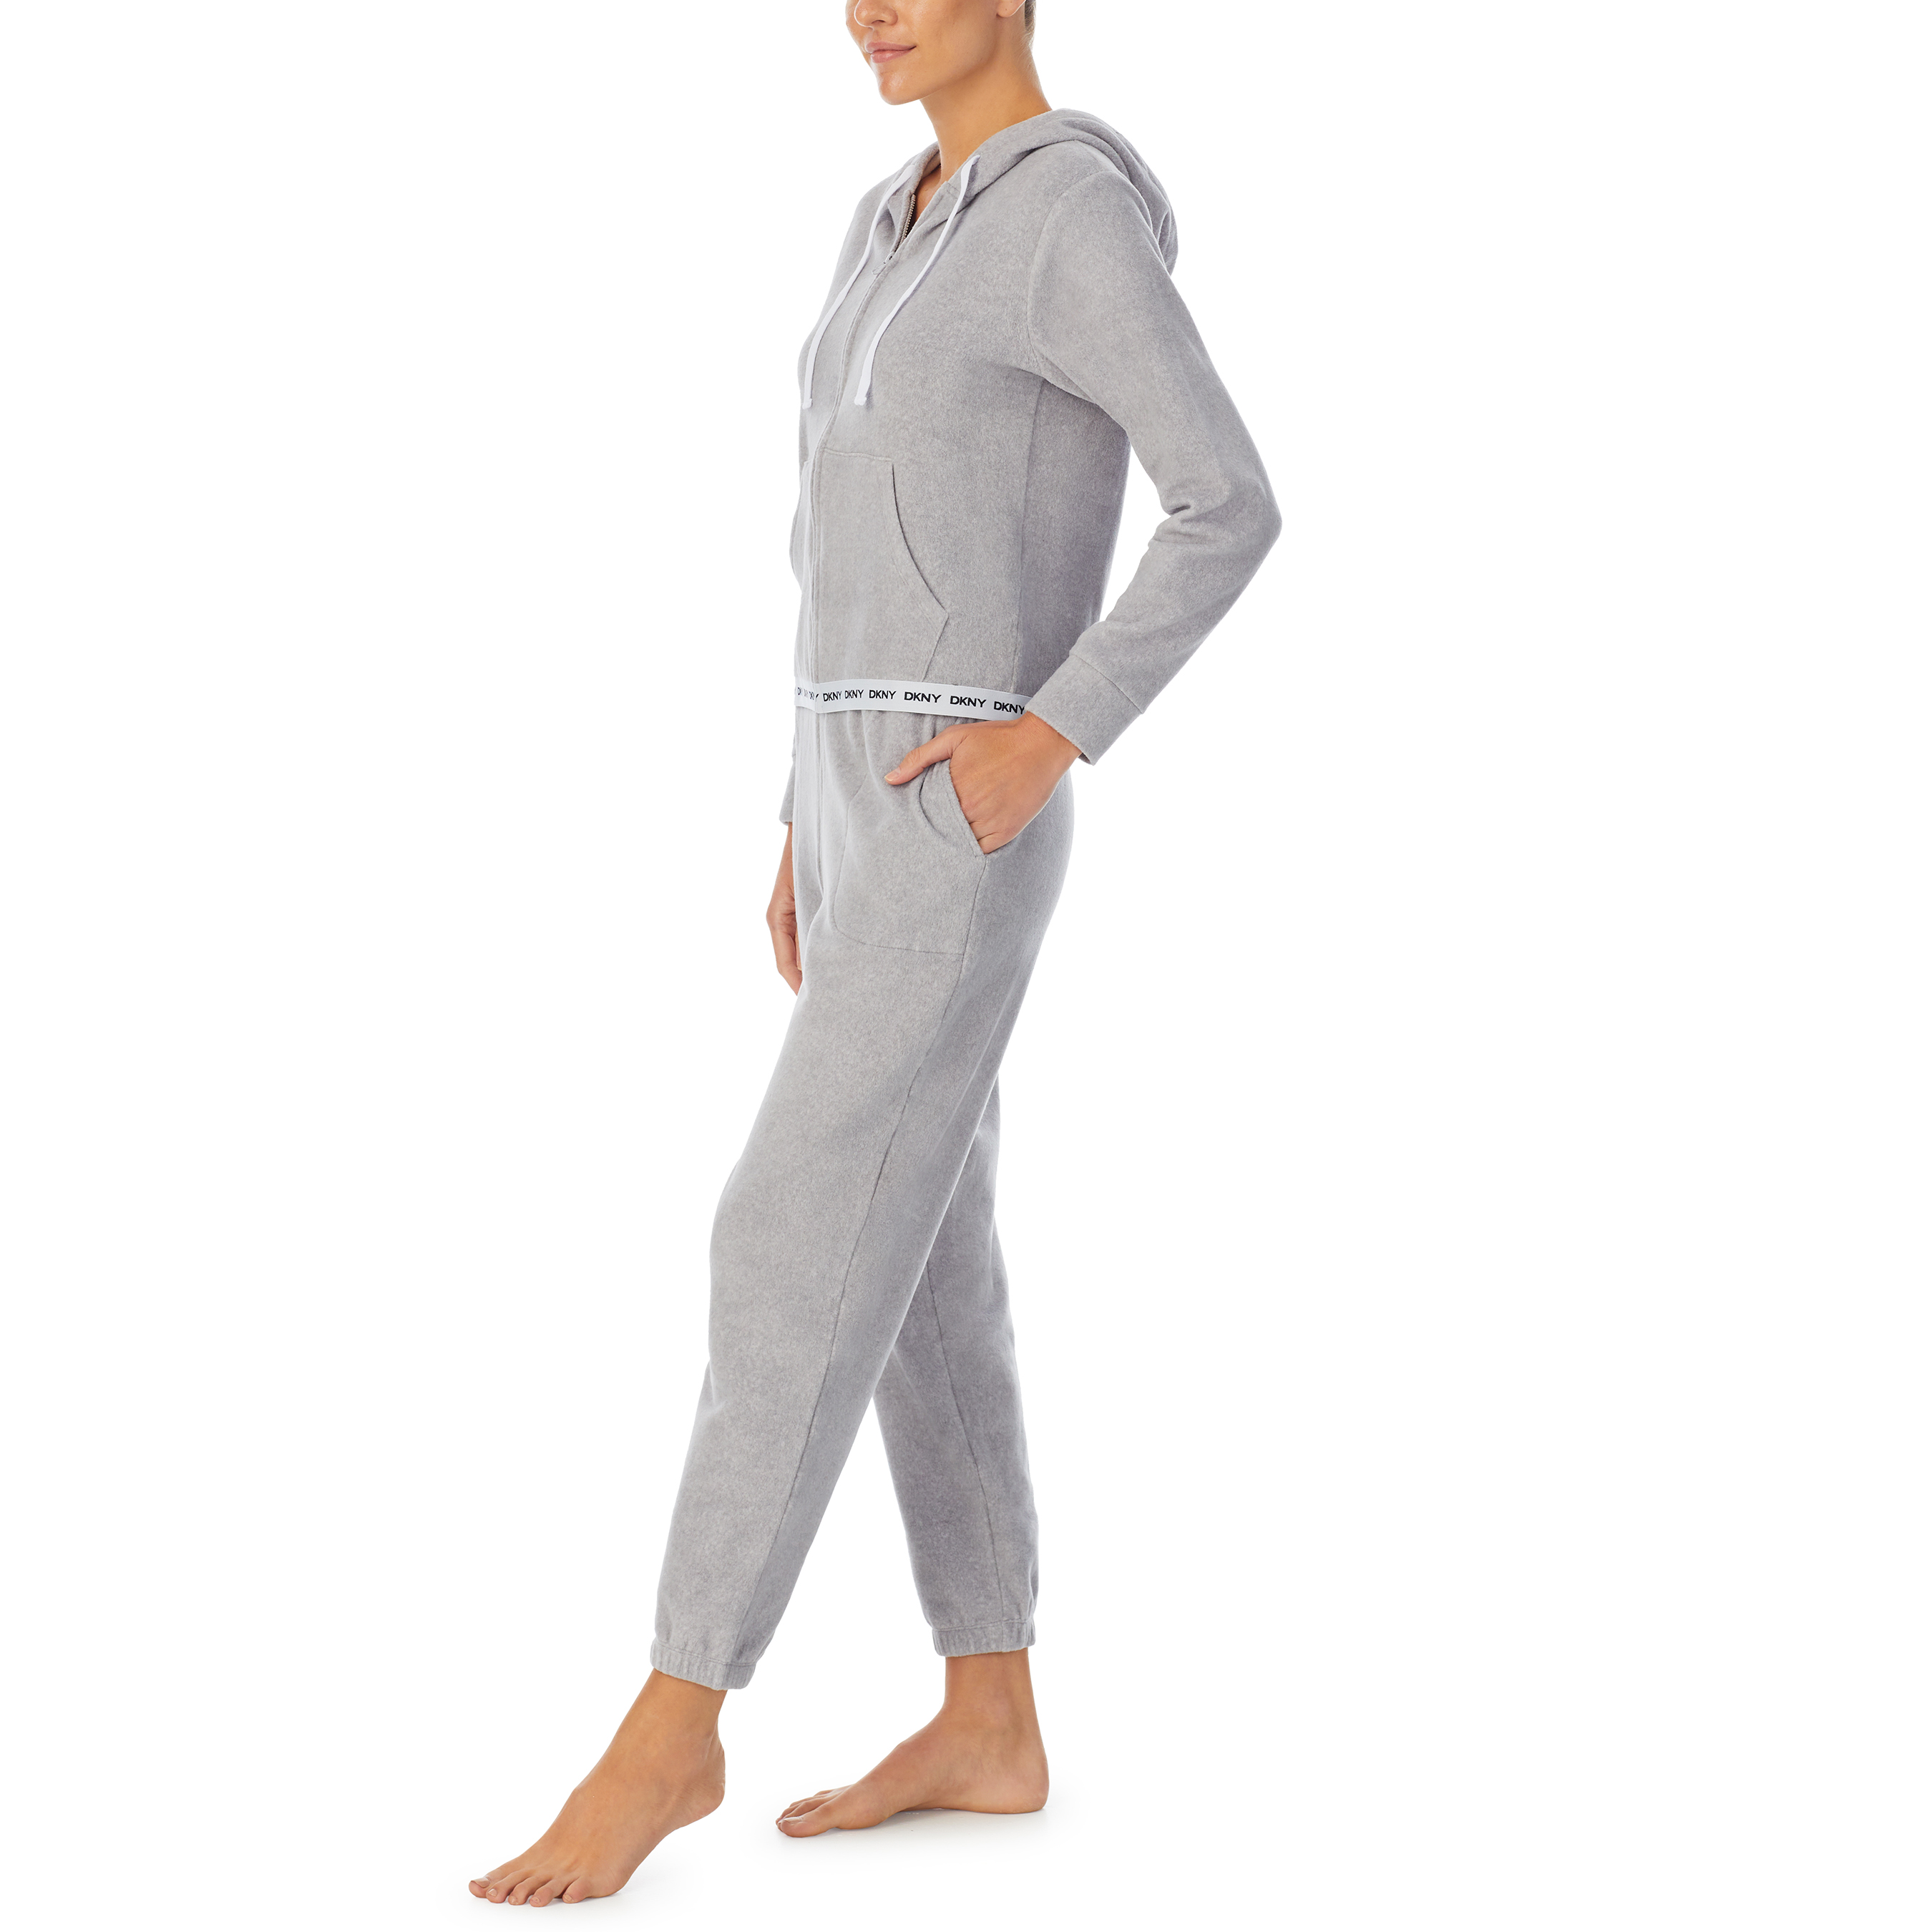 Work Hard-Chill Hard - Layer & Legging Sleep Set - Grey - Hthr, DKNY-2022595-Grey